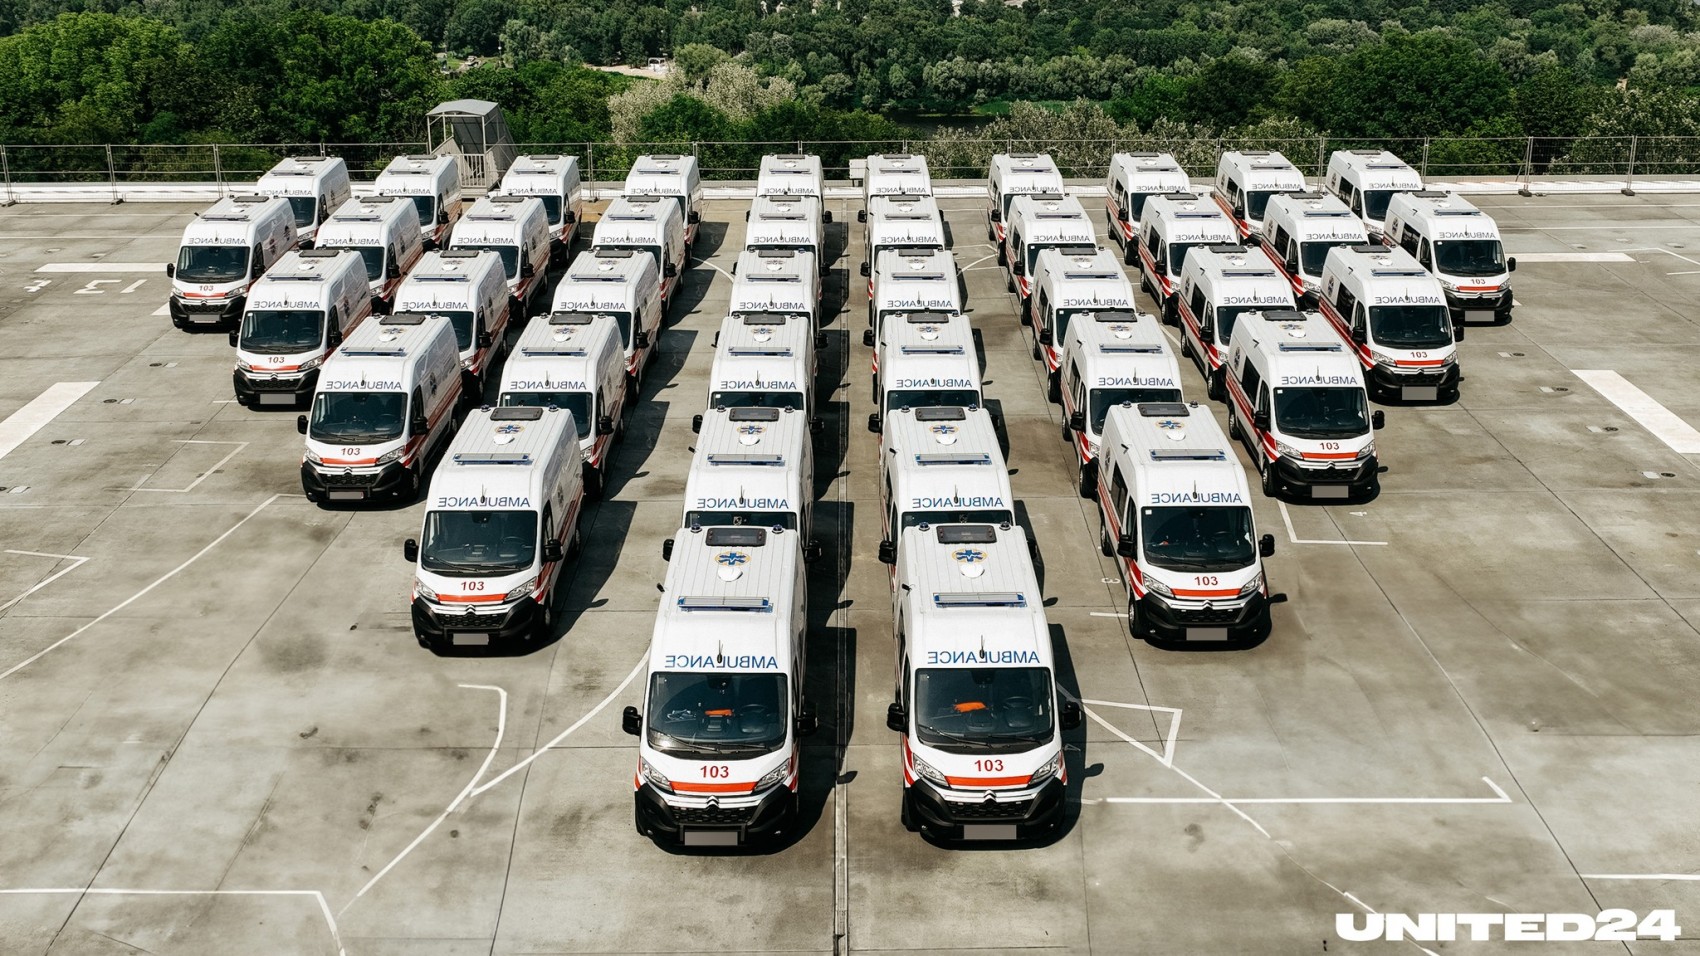 UNITED 24 delivered 40 ambulances to the hospital